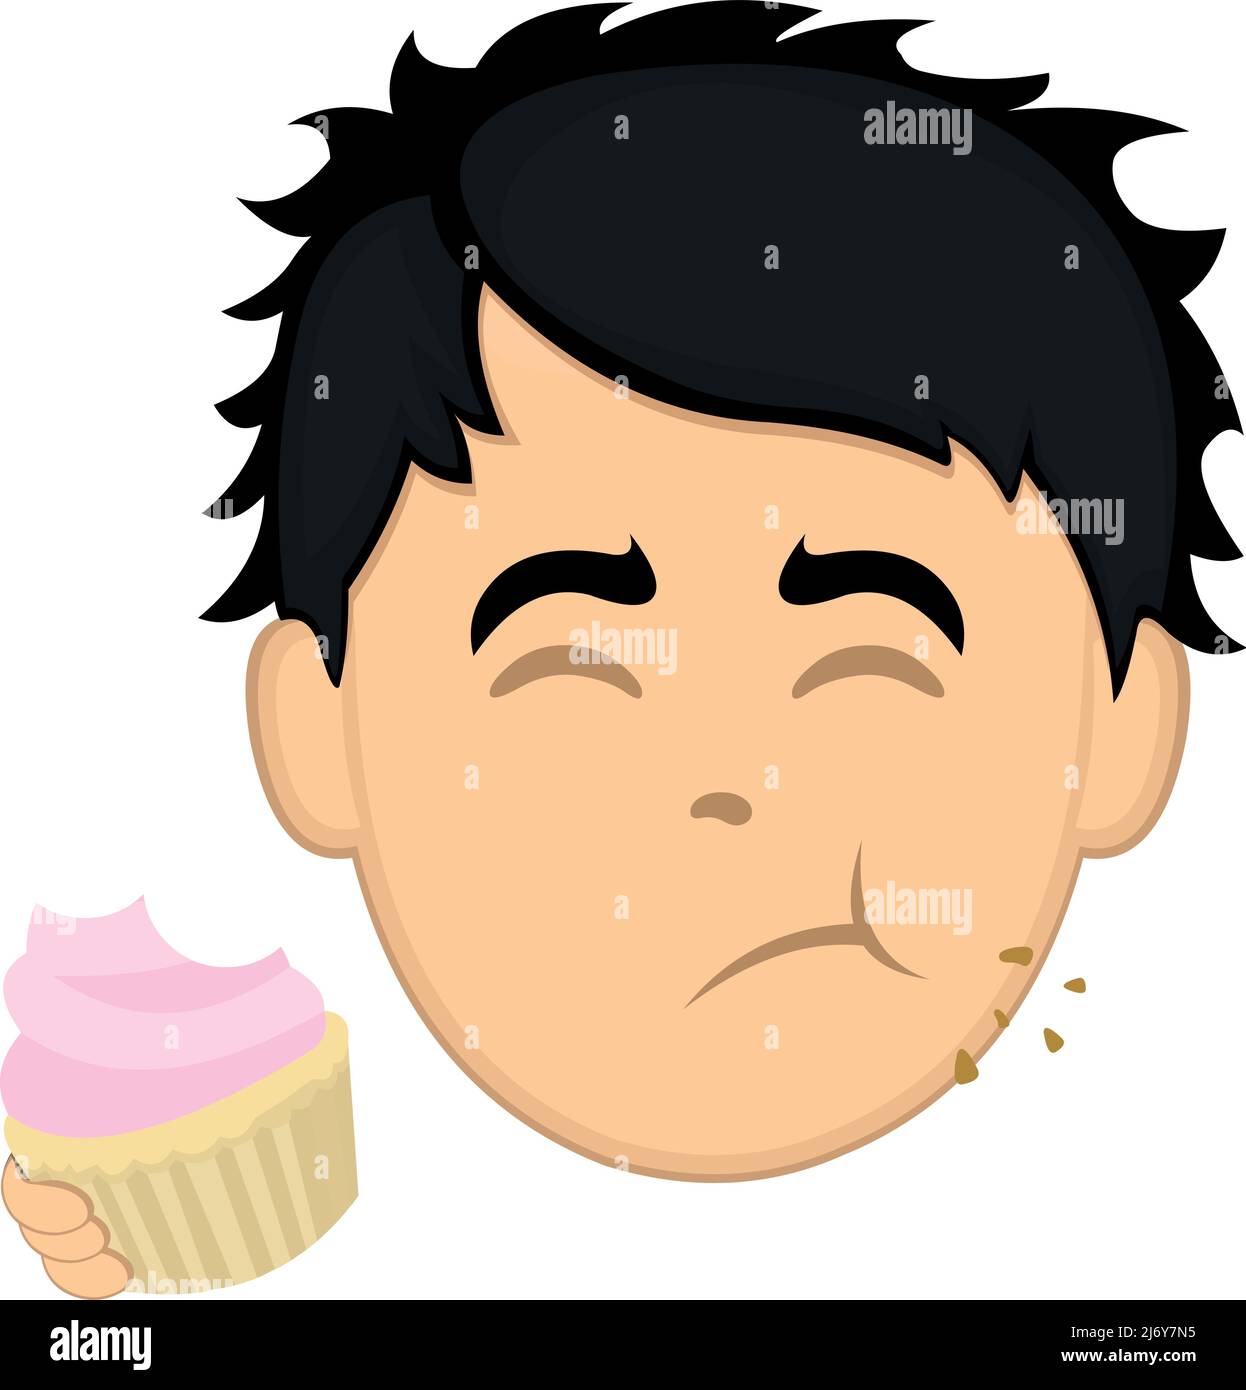 Vector illustration of a cartoon man's face eating a cupcake Stock Vector